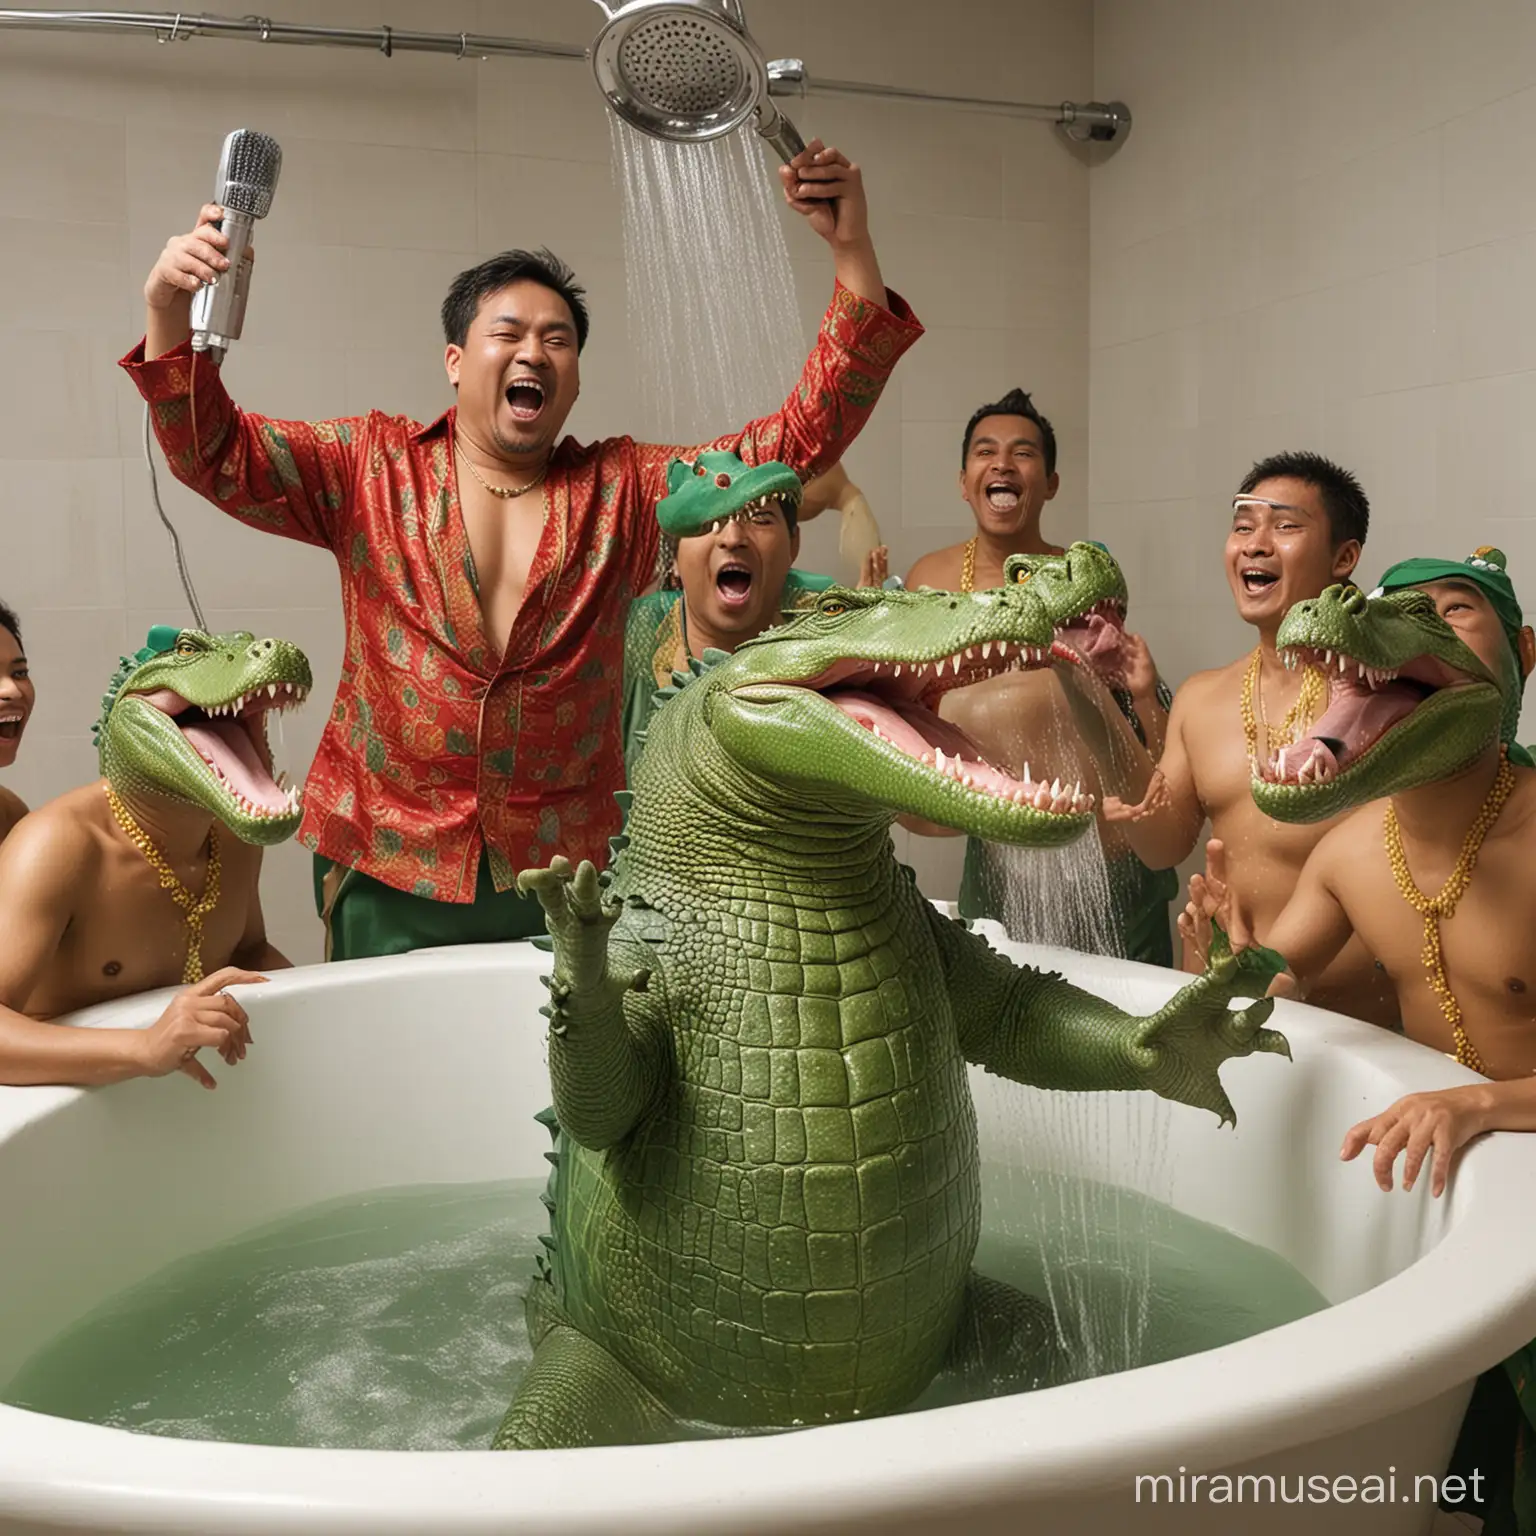 Playful Crocodile Singing in Bathtub with Traditional Malay Dancers